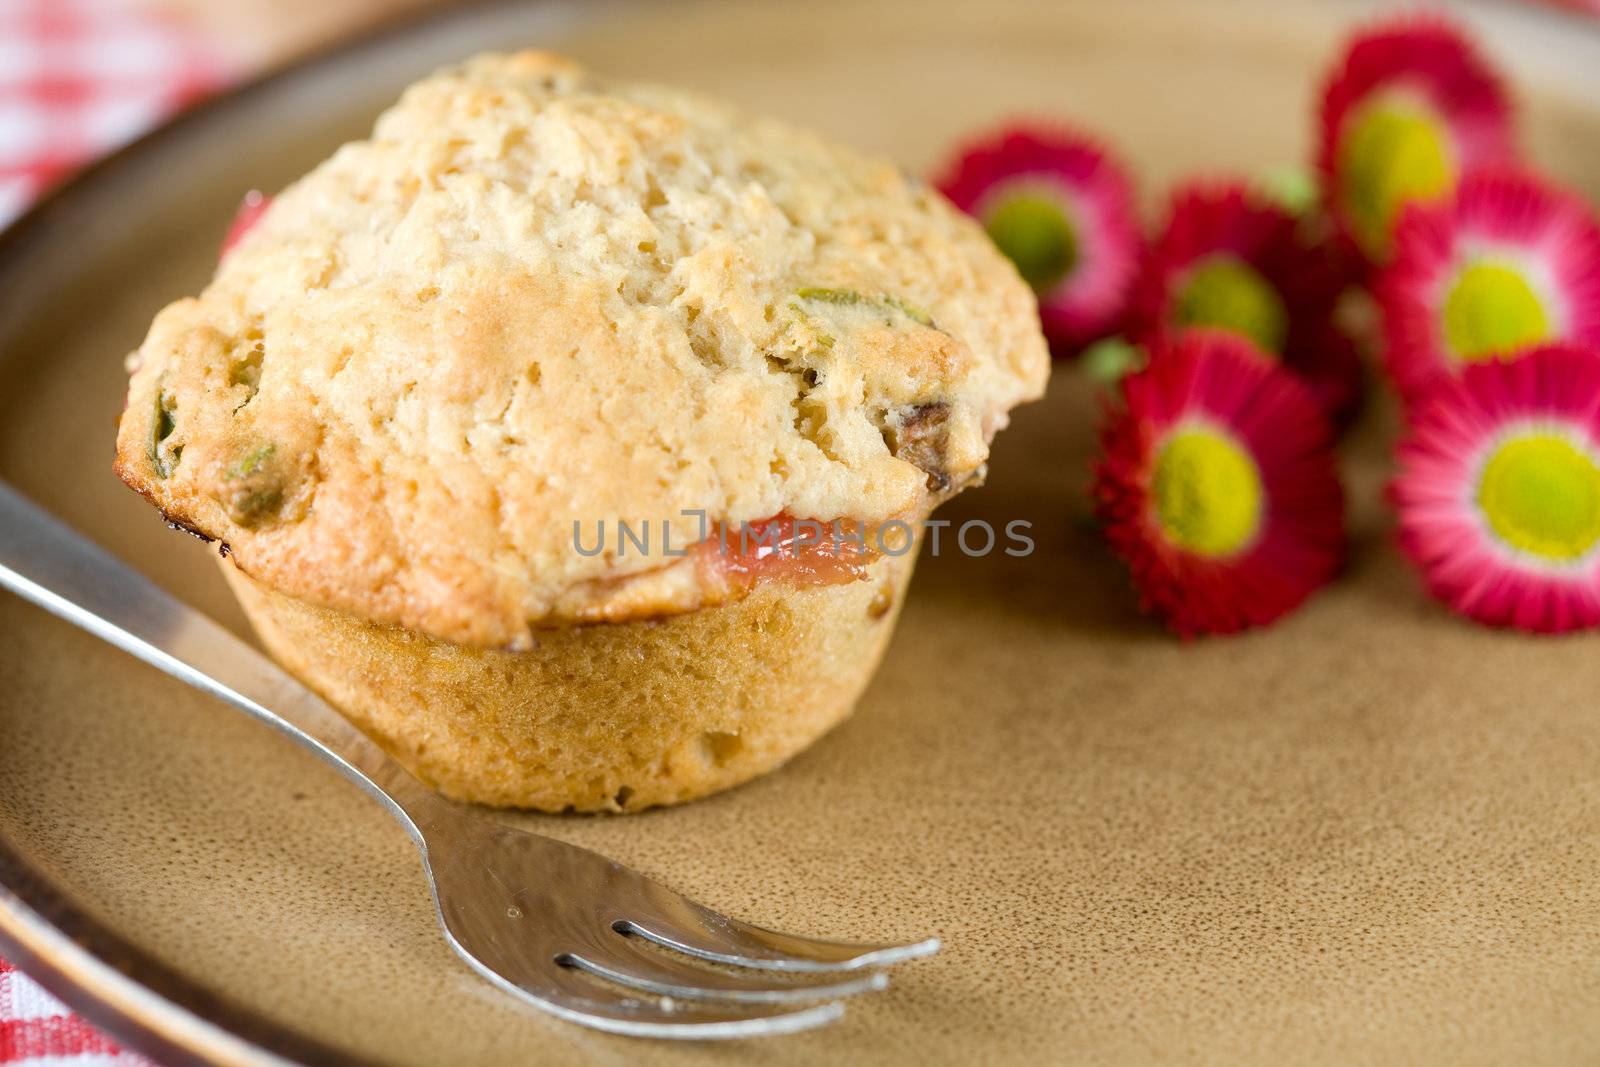 Muffin by Fotosmurf